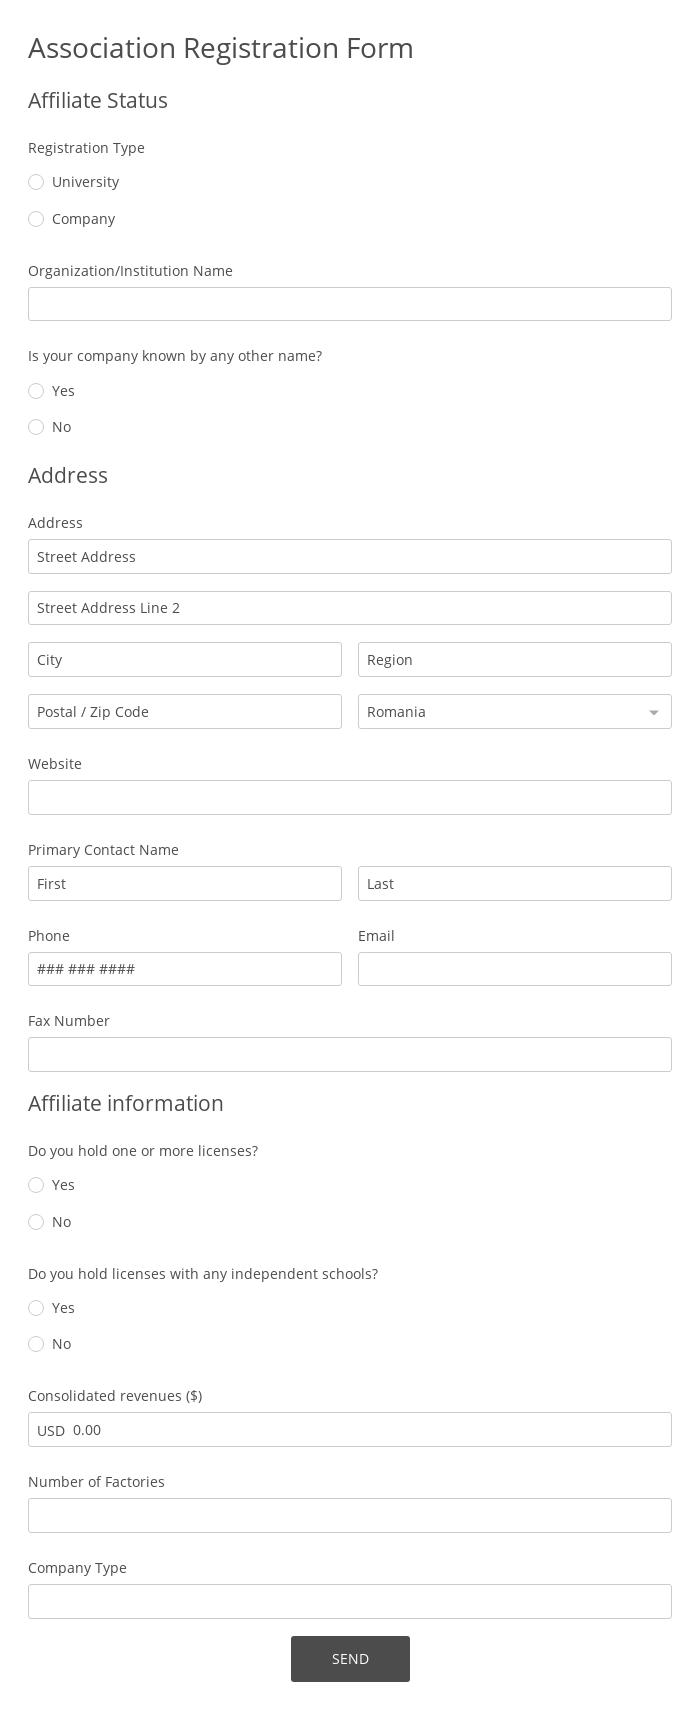 Association Registration Form